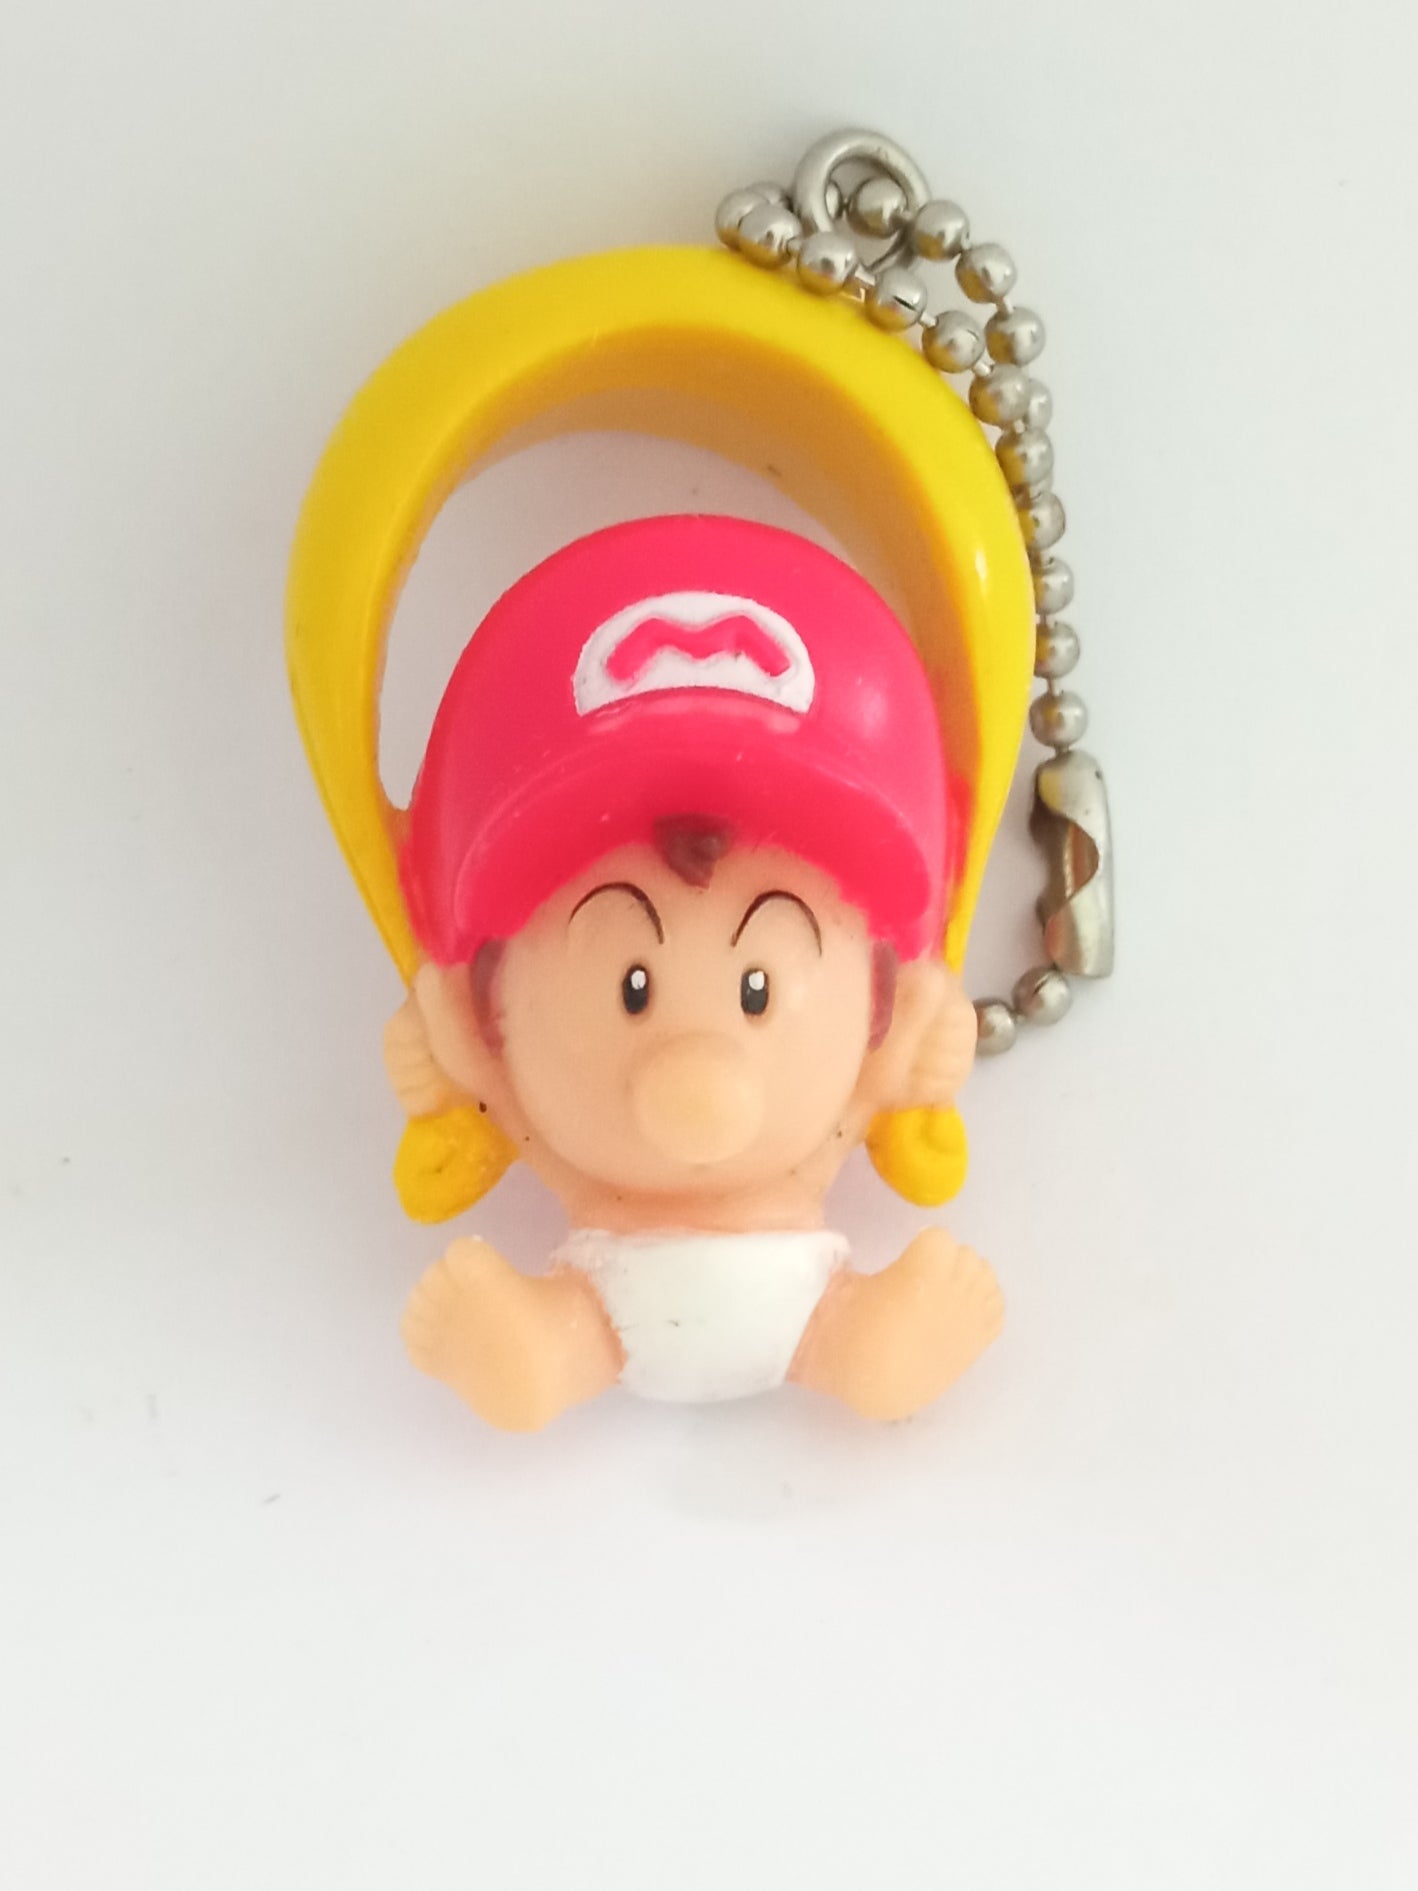 Classic Game Super Mario Bros Keychain Mario Yoshi Figure Key